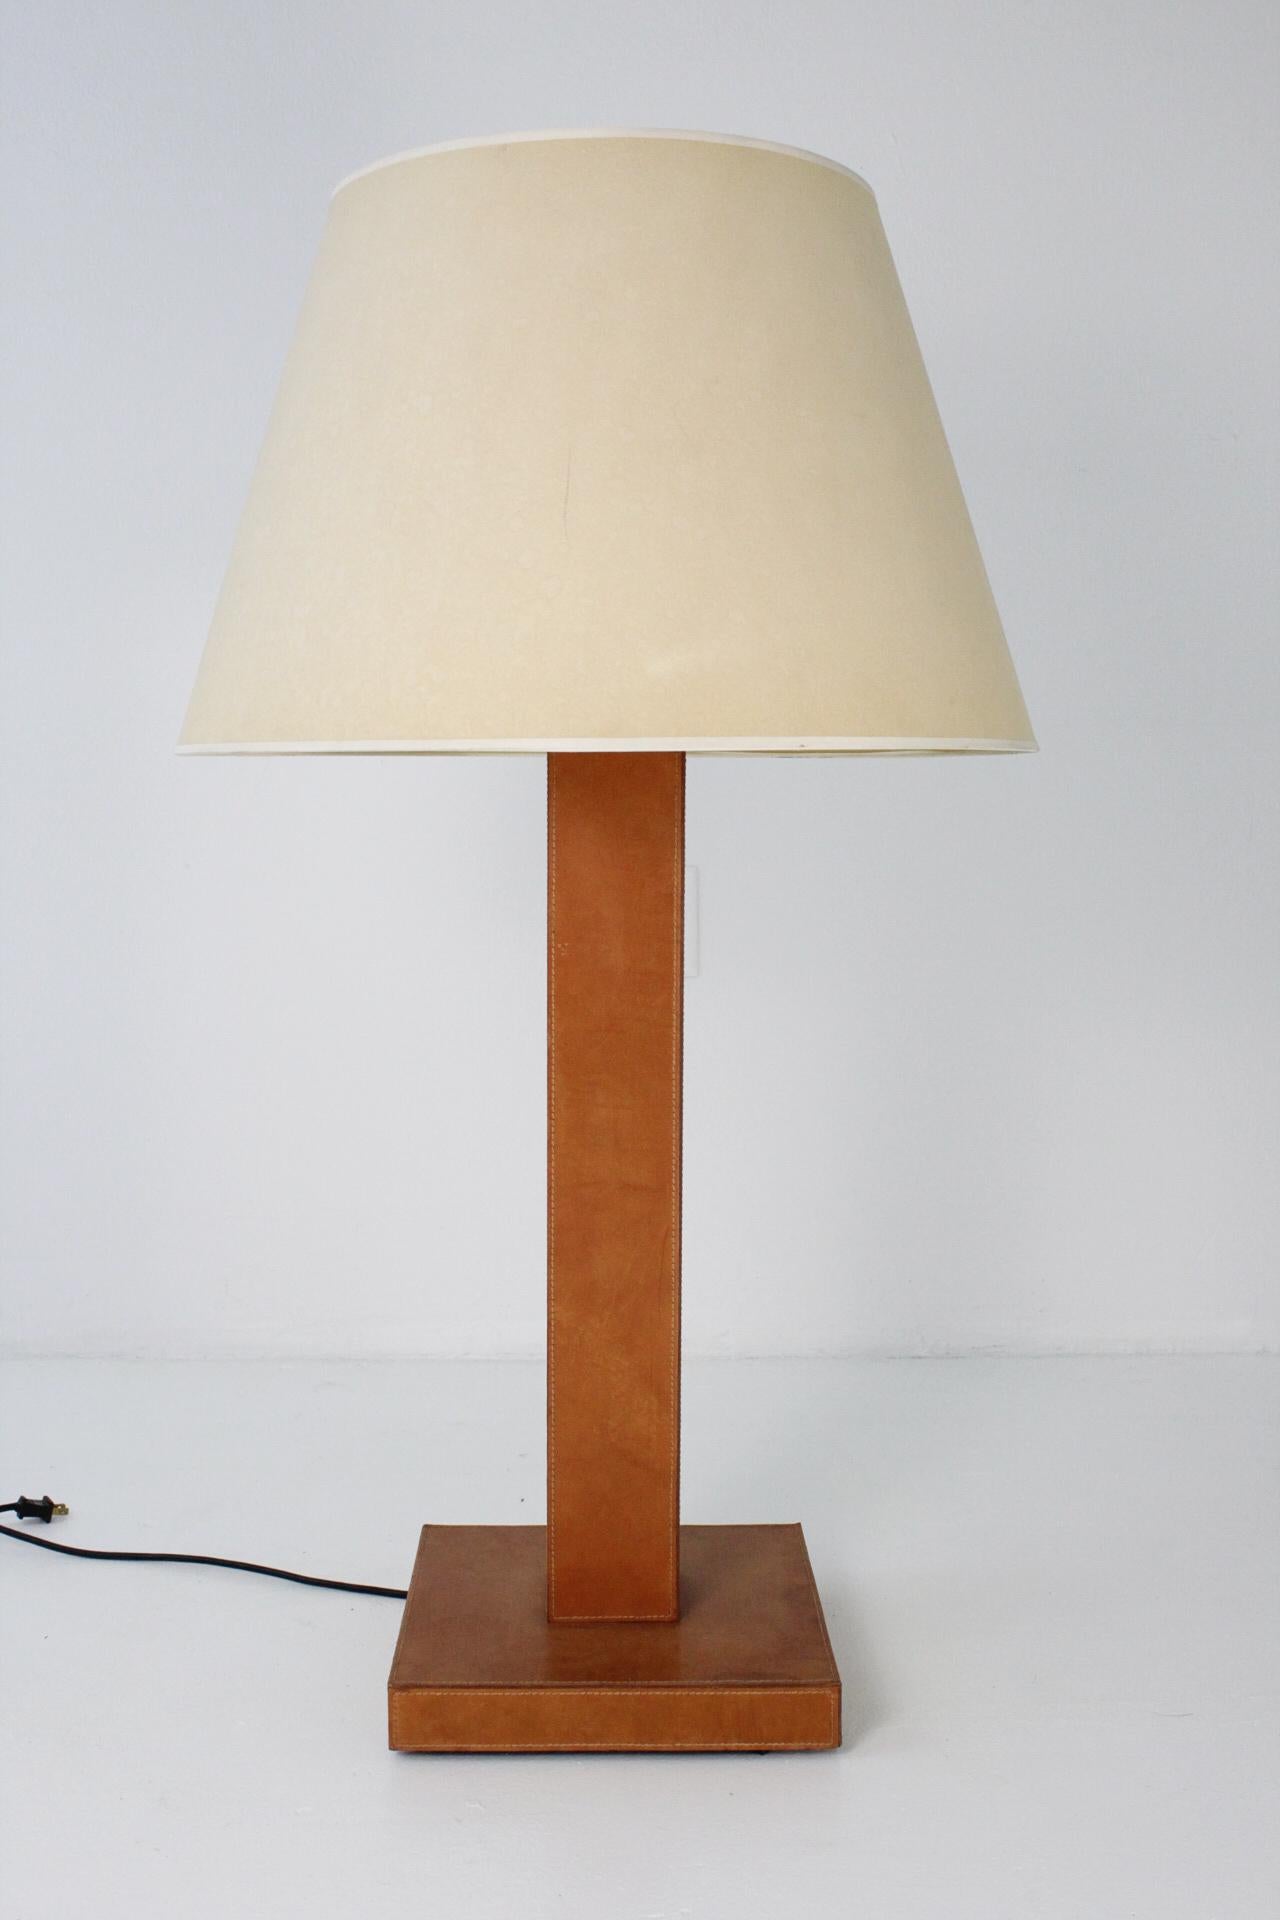 Armani Large Scale Leather Lamp, 2000, Italy 7